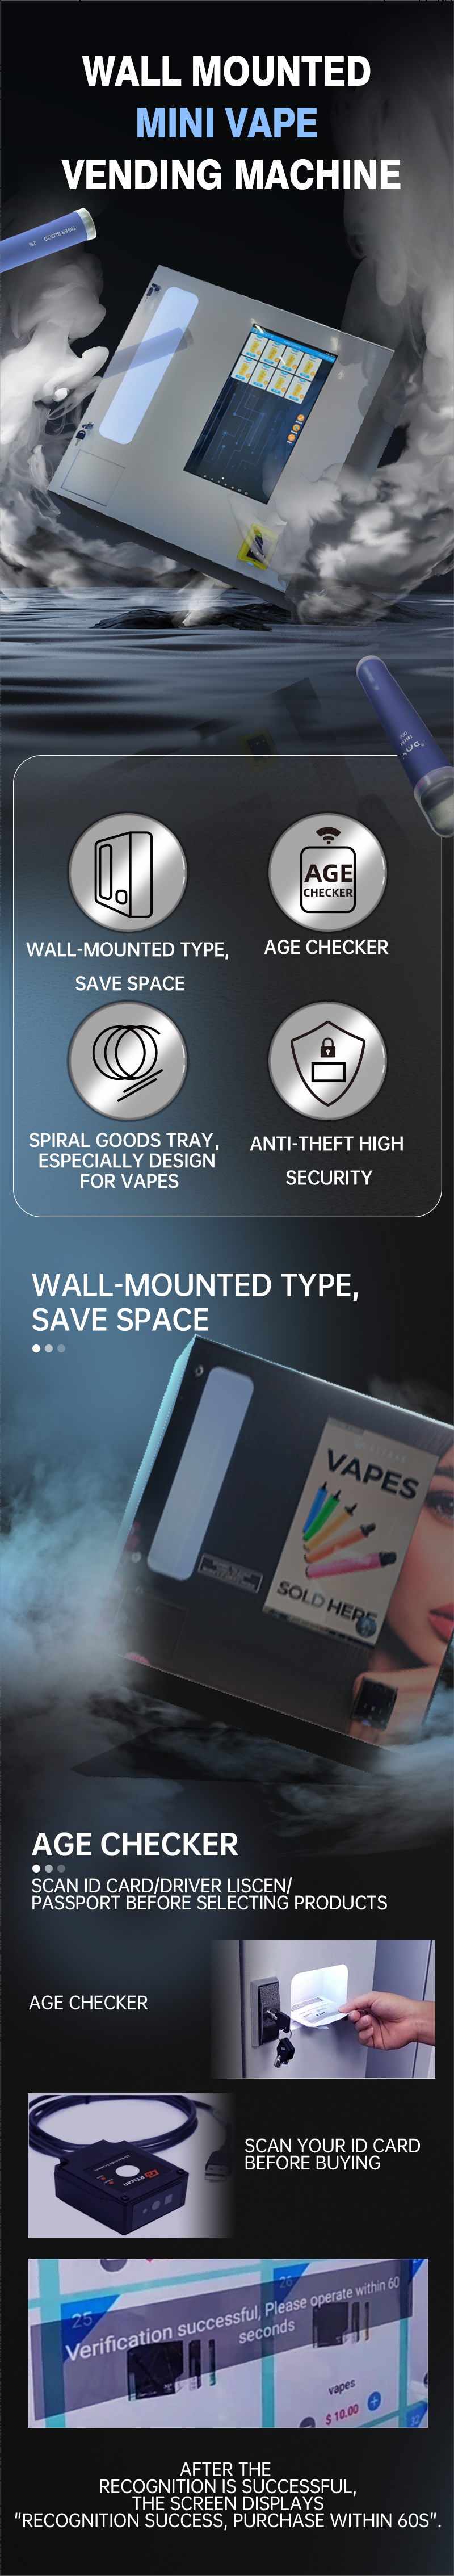 Micron weimi smart vending 21.5 inch touch screen mini vape E-cigarette vending machine, it can hold 135~145 vapes